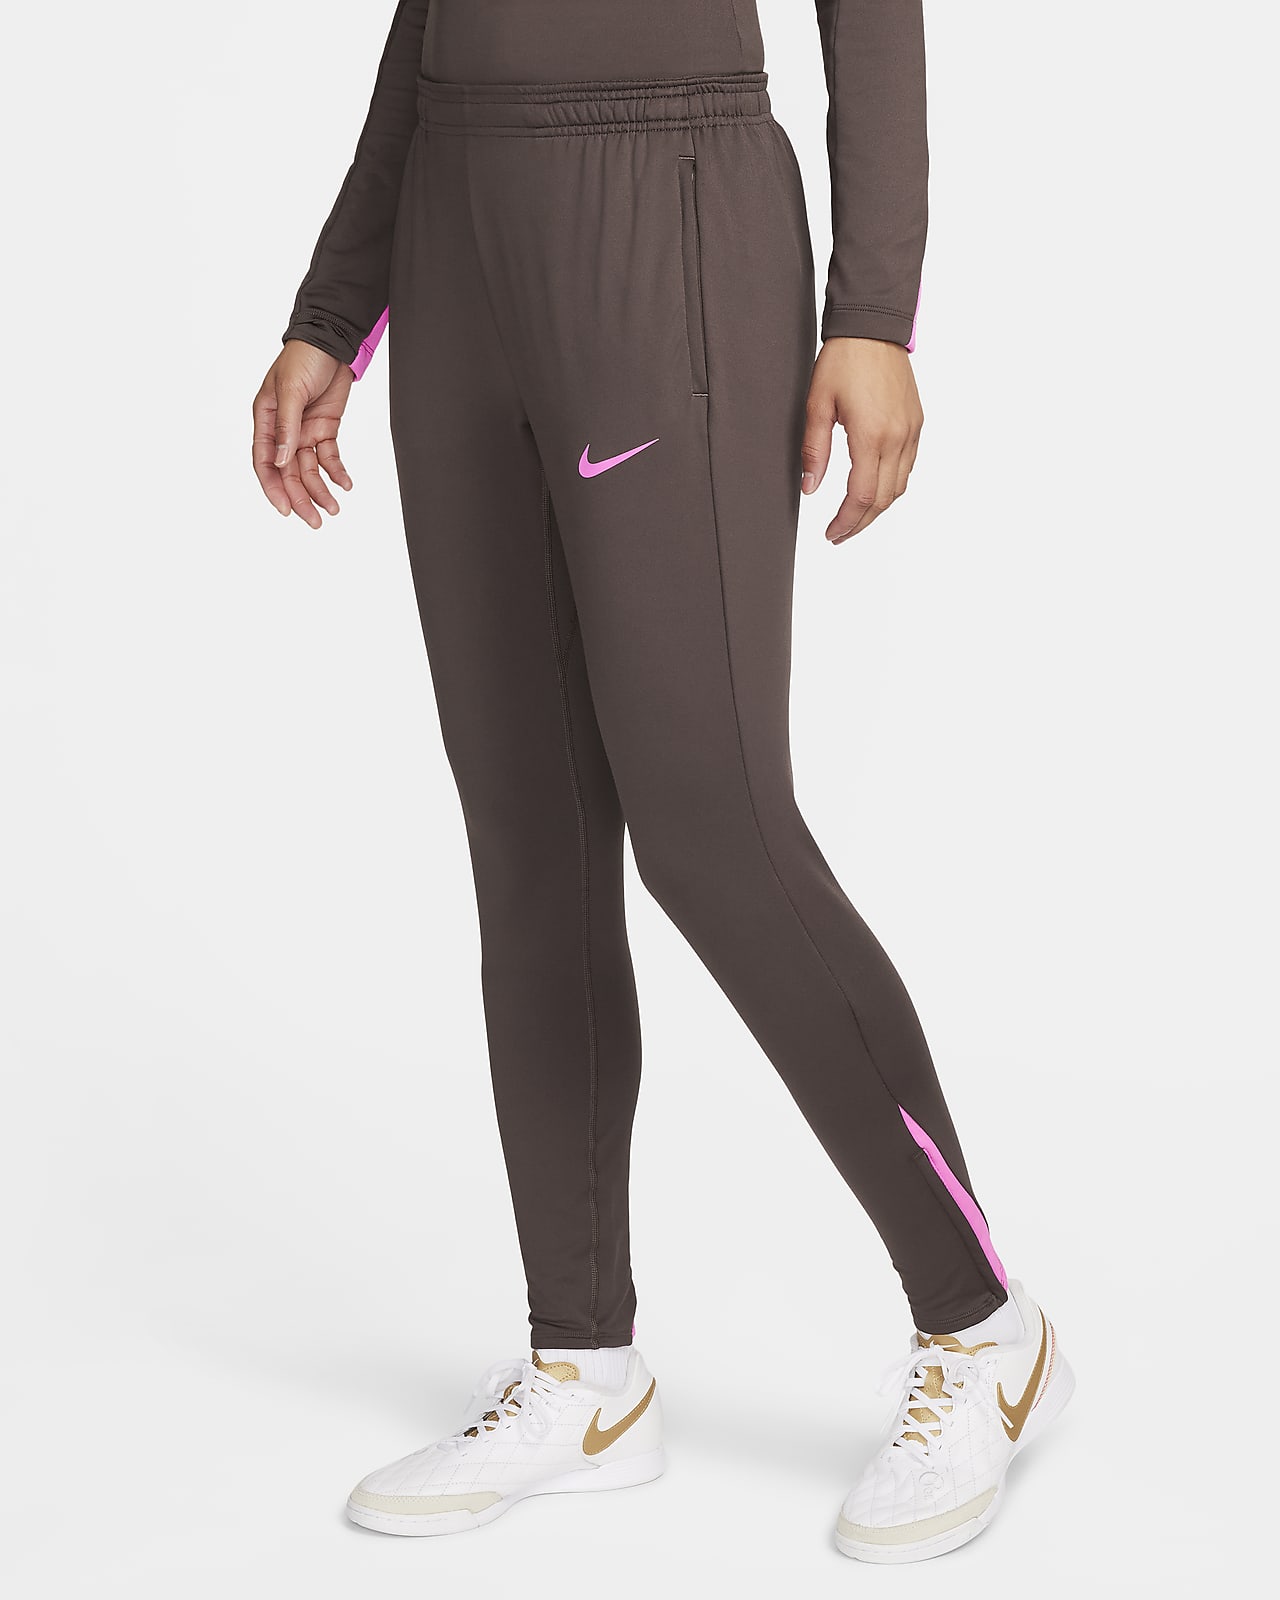 Women's Nike Swoosh Run Running Tights, Iced Lilac, S 